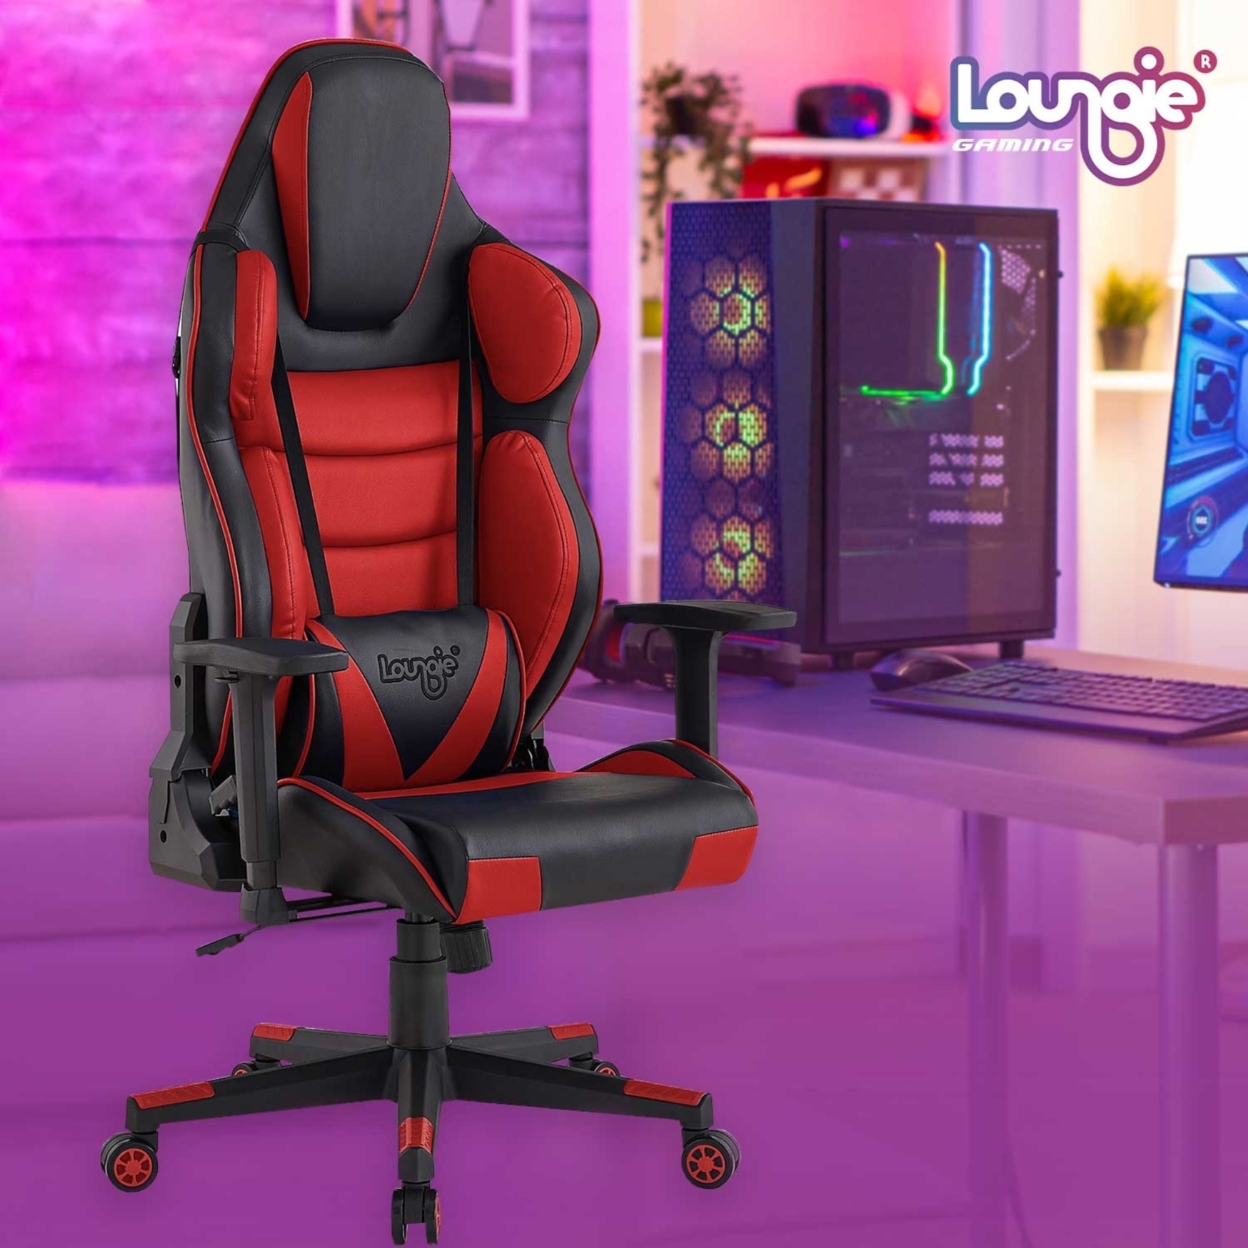 Kiya Game Chair-Swivel, Adjustable Back Angle, Seat Height and Armrest-Big Headrest, 360 Degree Rotation-Lumbar Support Cushion - red